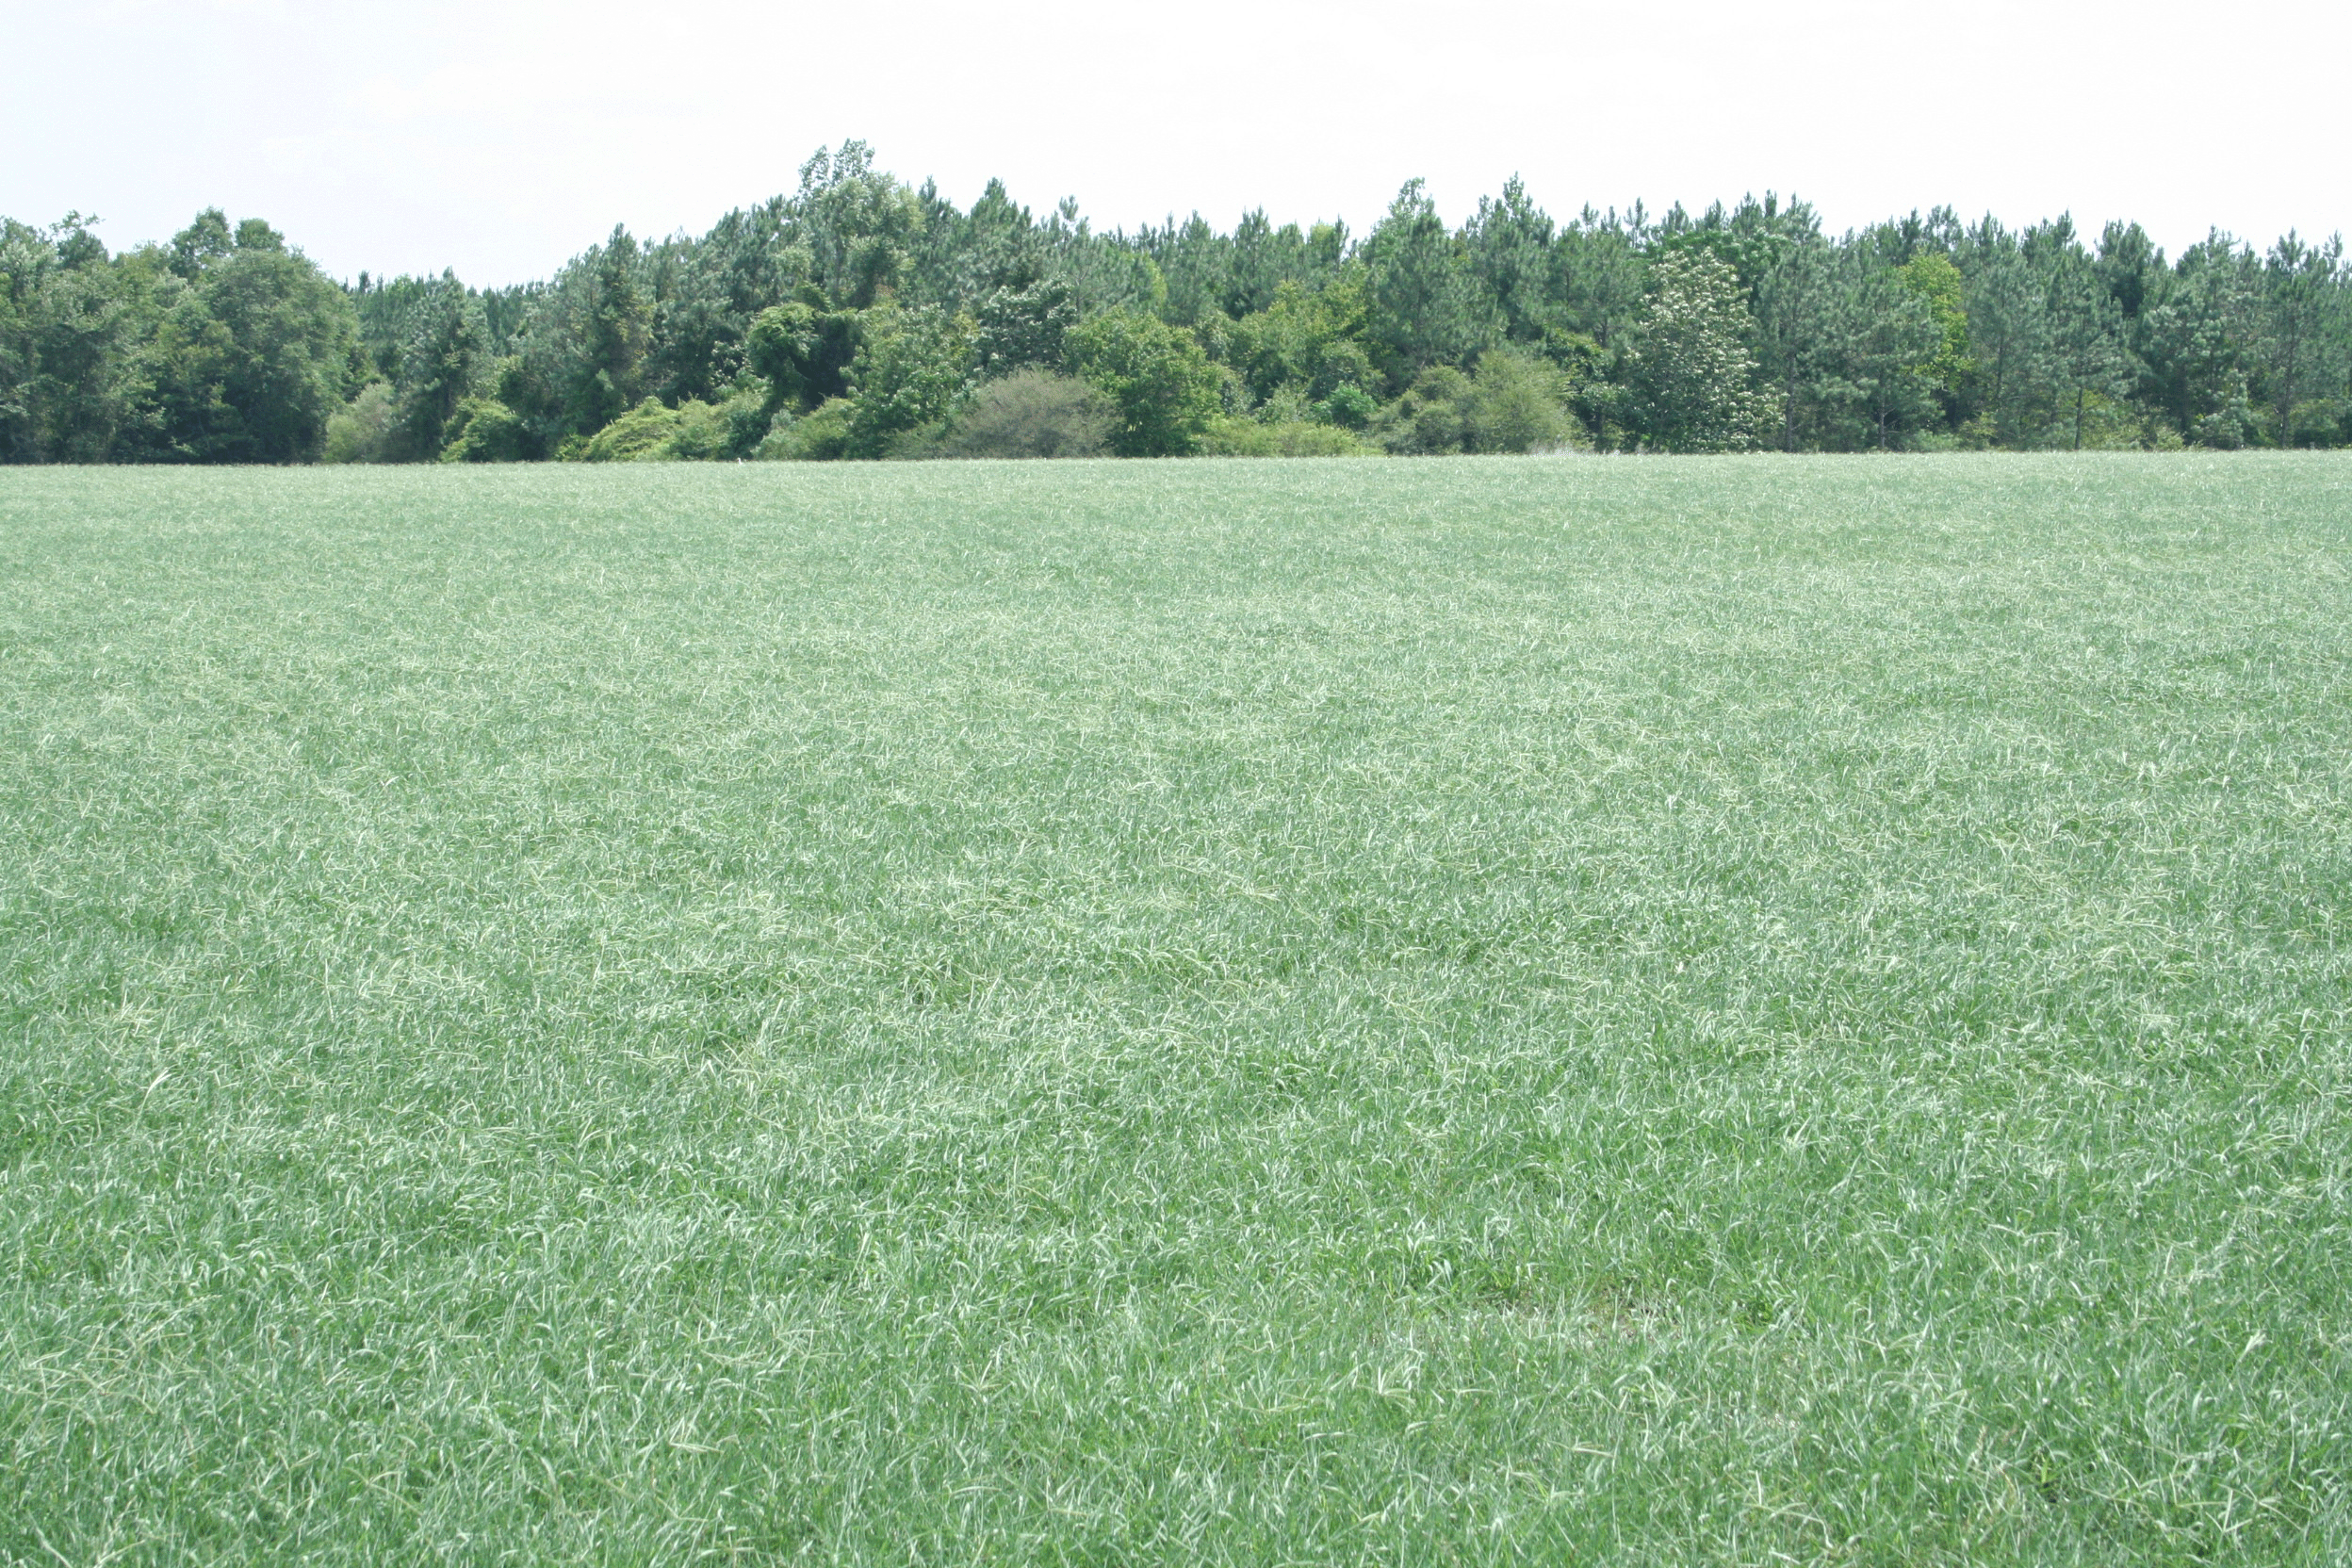 Field of bahiagrass